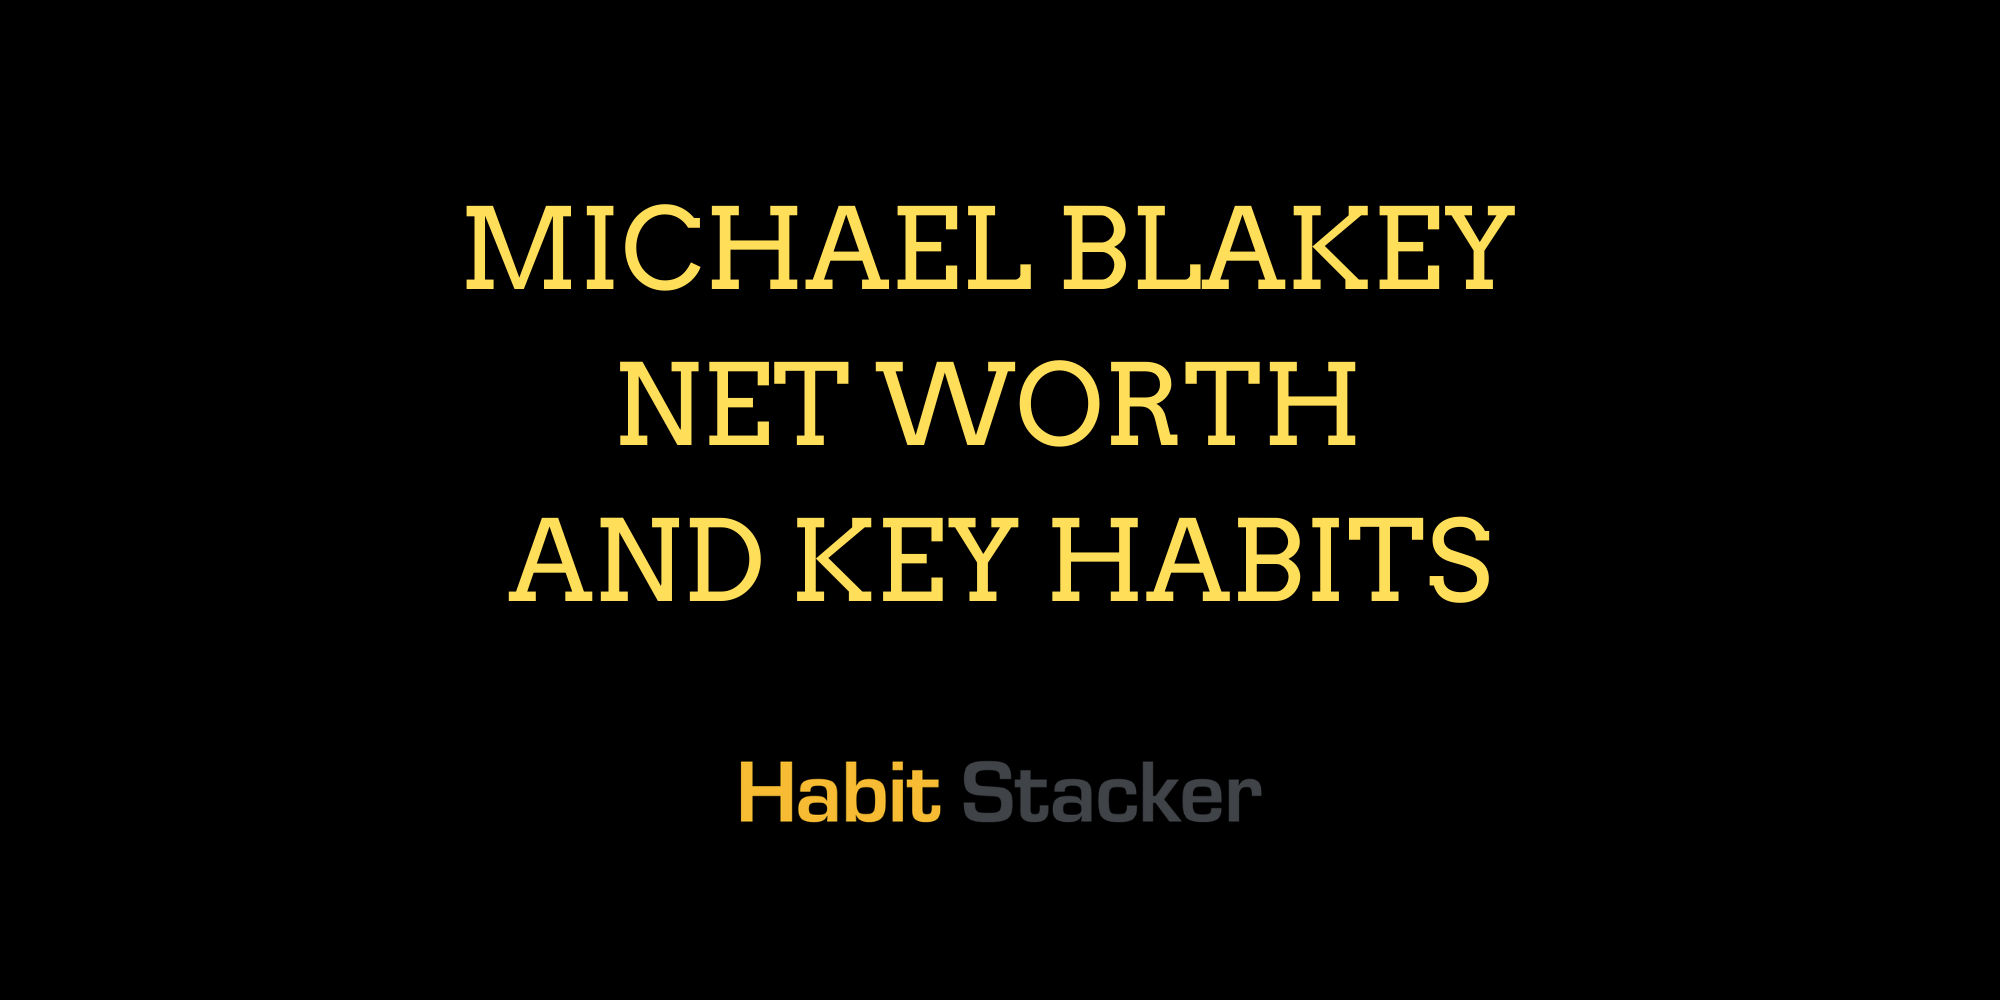 Michael Blakey Net Worth and Key Habits